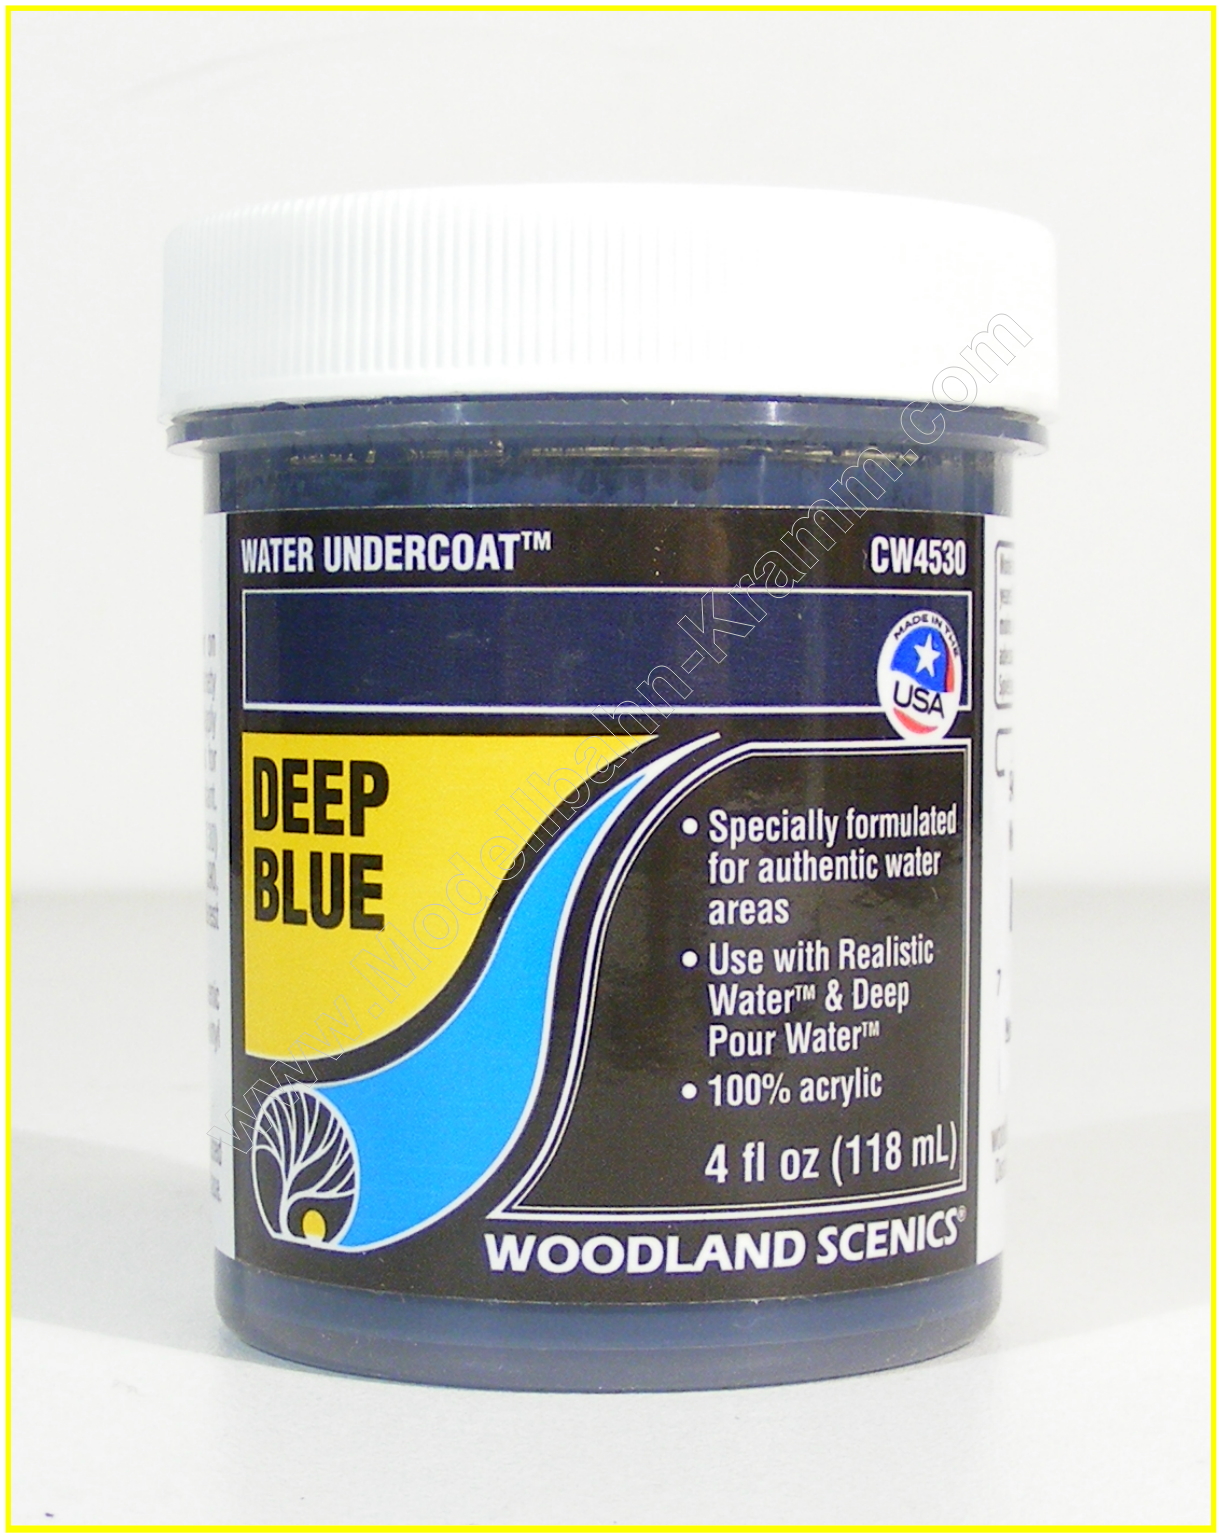 Woodland Scenics WCW4530, EAN 2000008728133: Wassergrundfarbe tiefblau